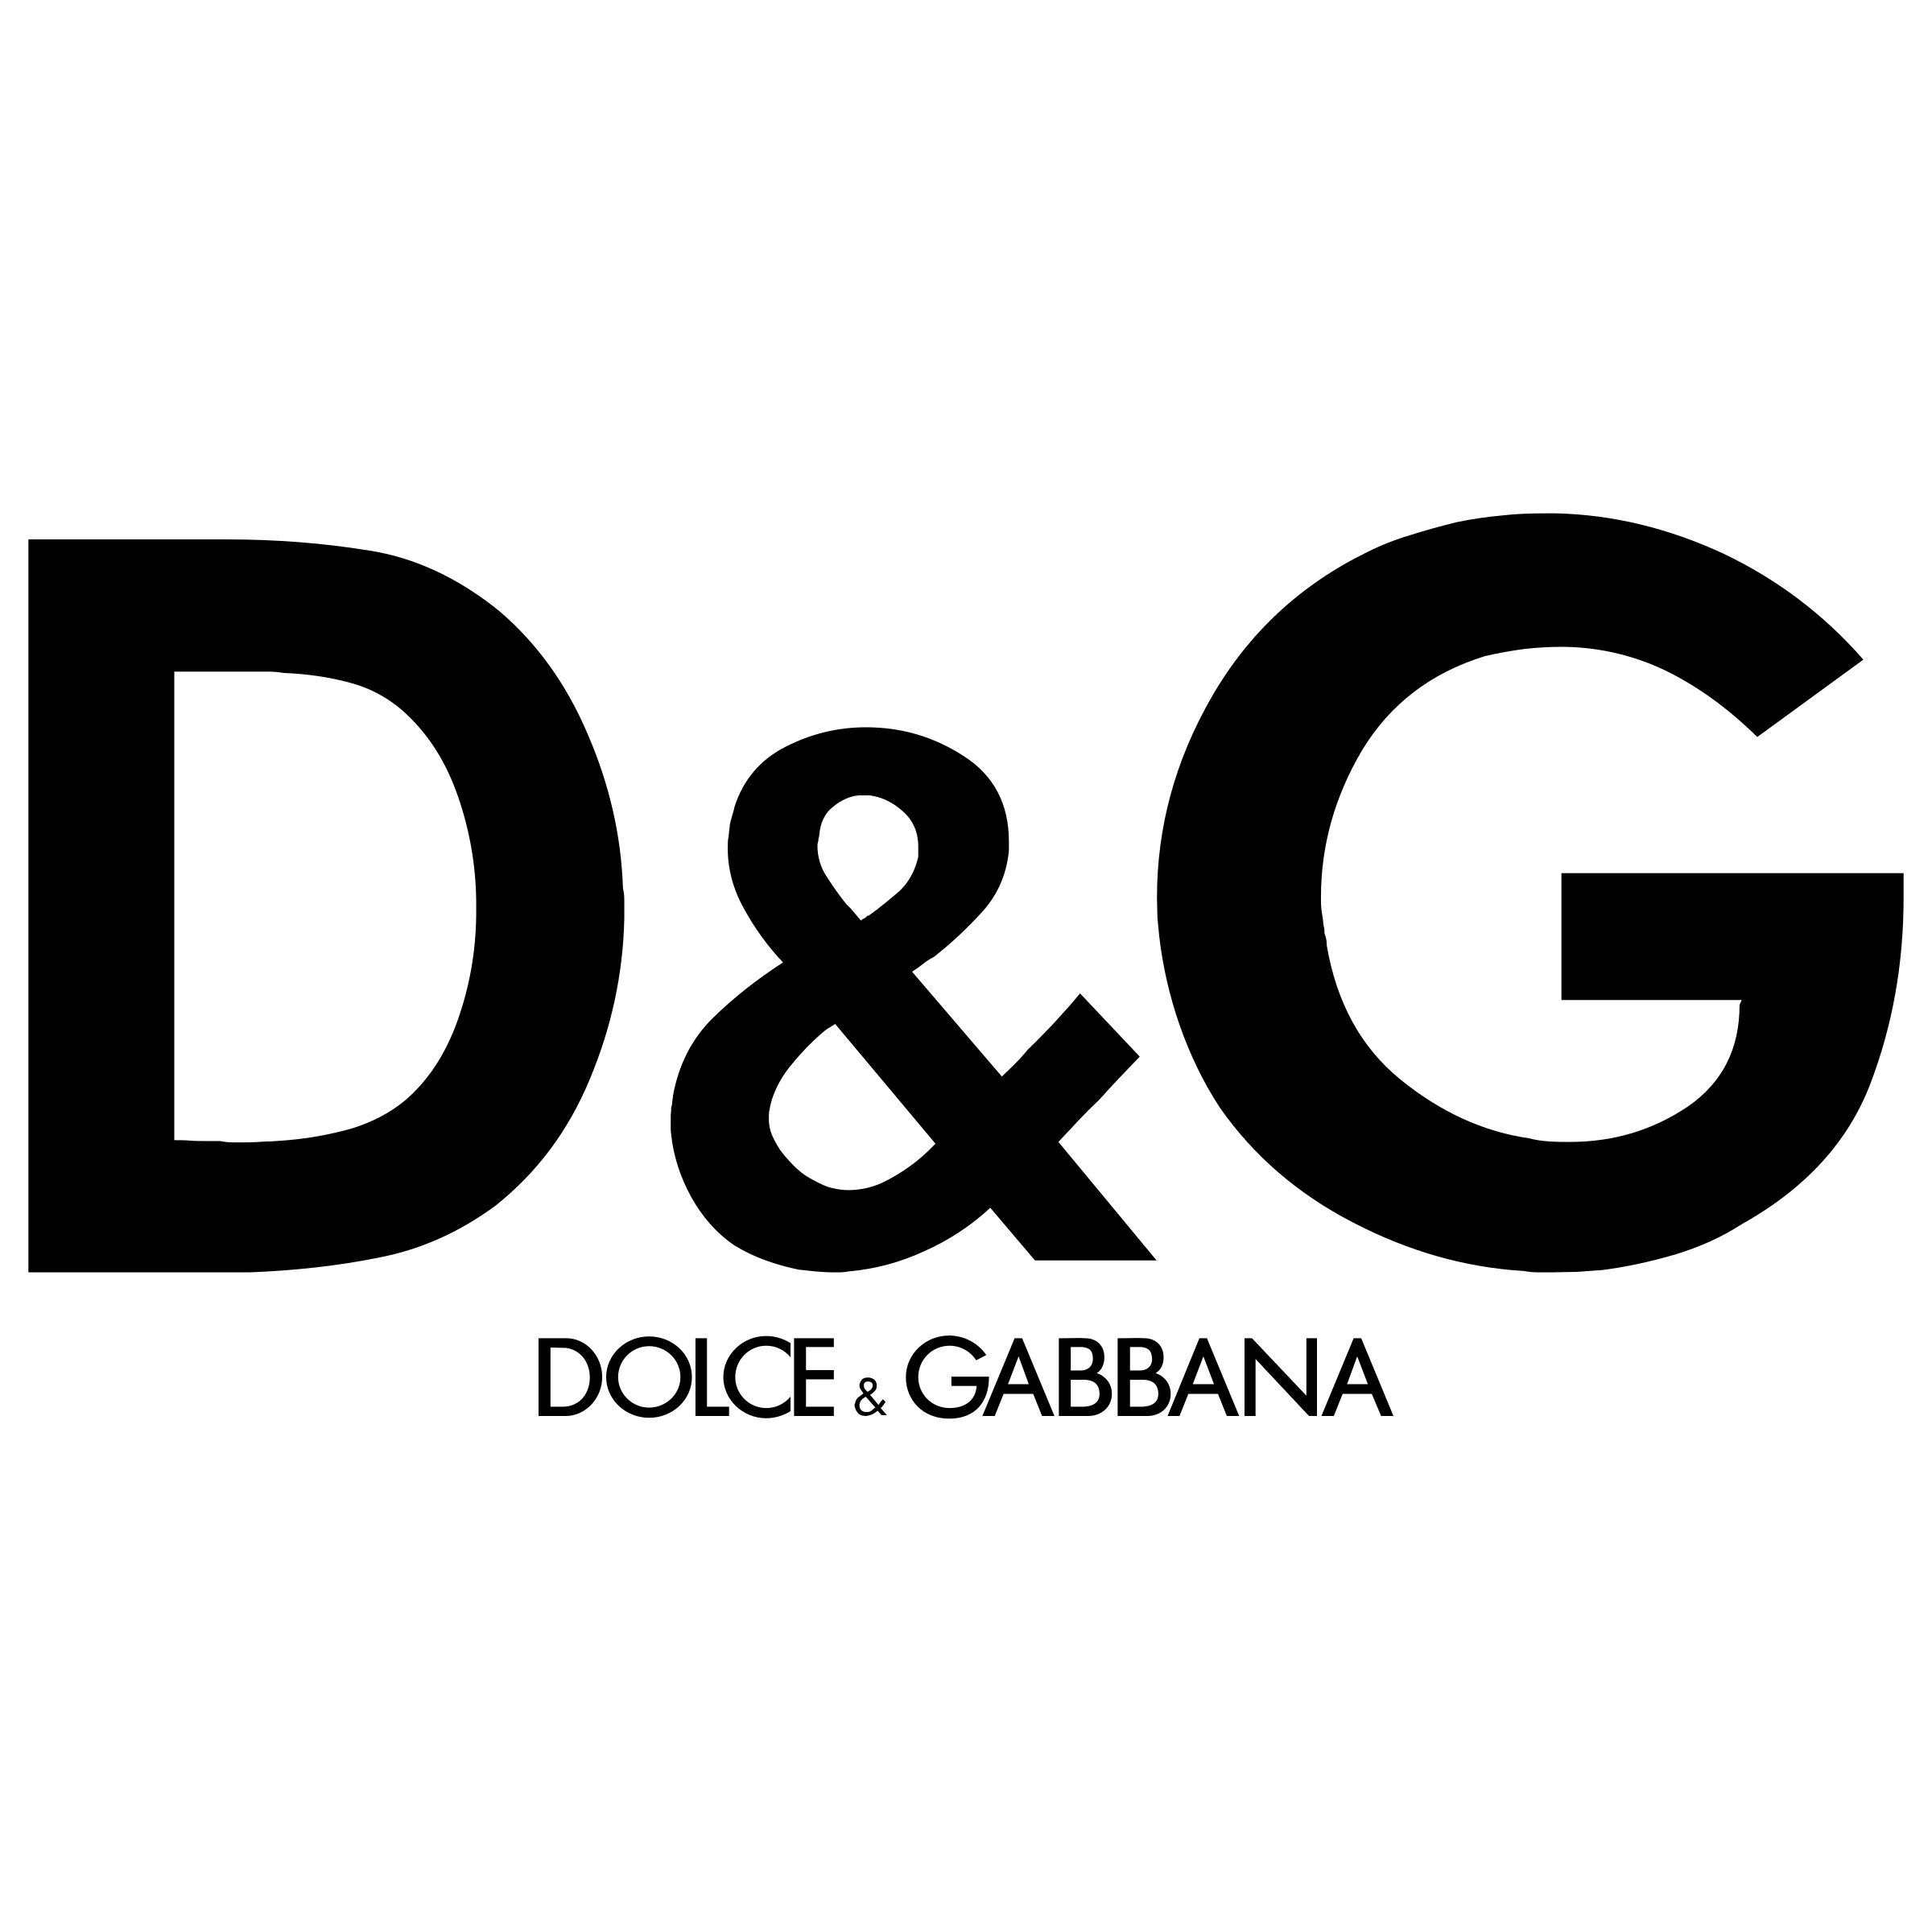 Dolce and Gabanna Logo - Dolce & Gabbana Logo PNG Transparent & SVG Vector - Freebie Supply